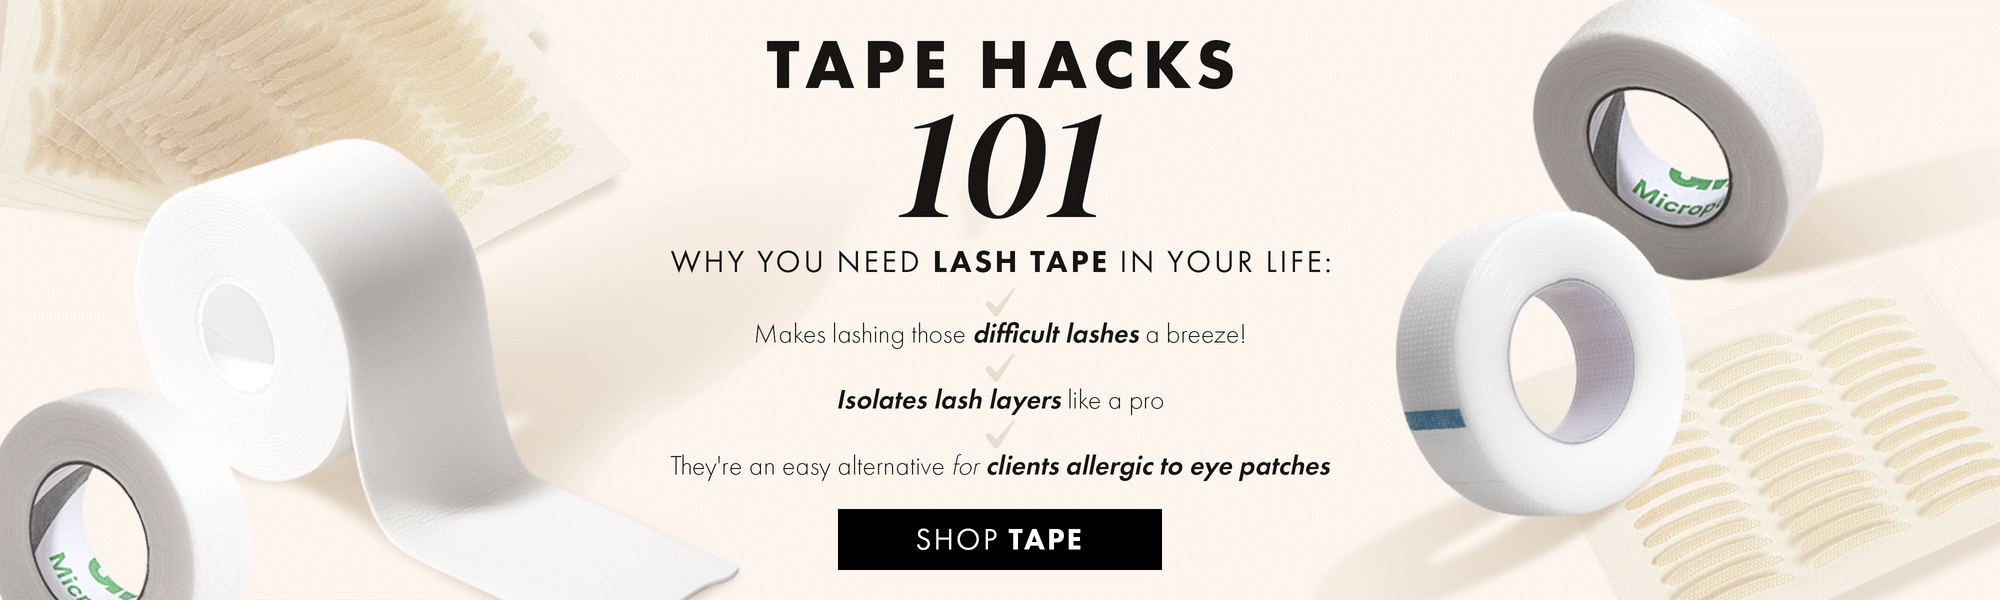 Tape Hacks